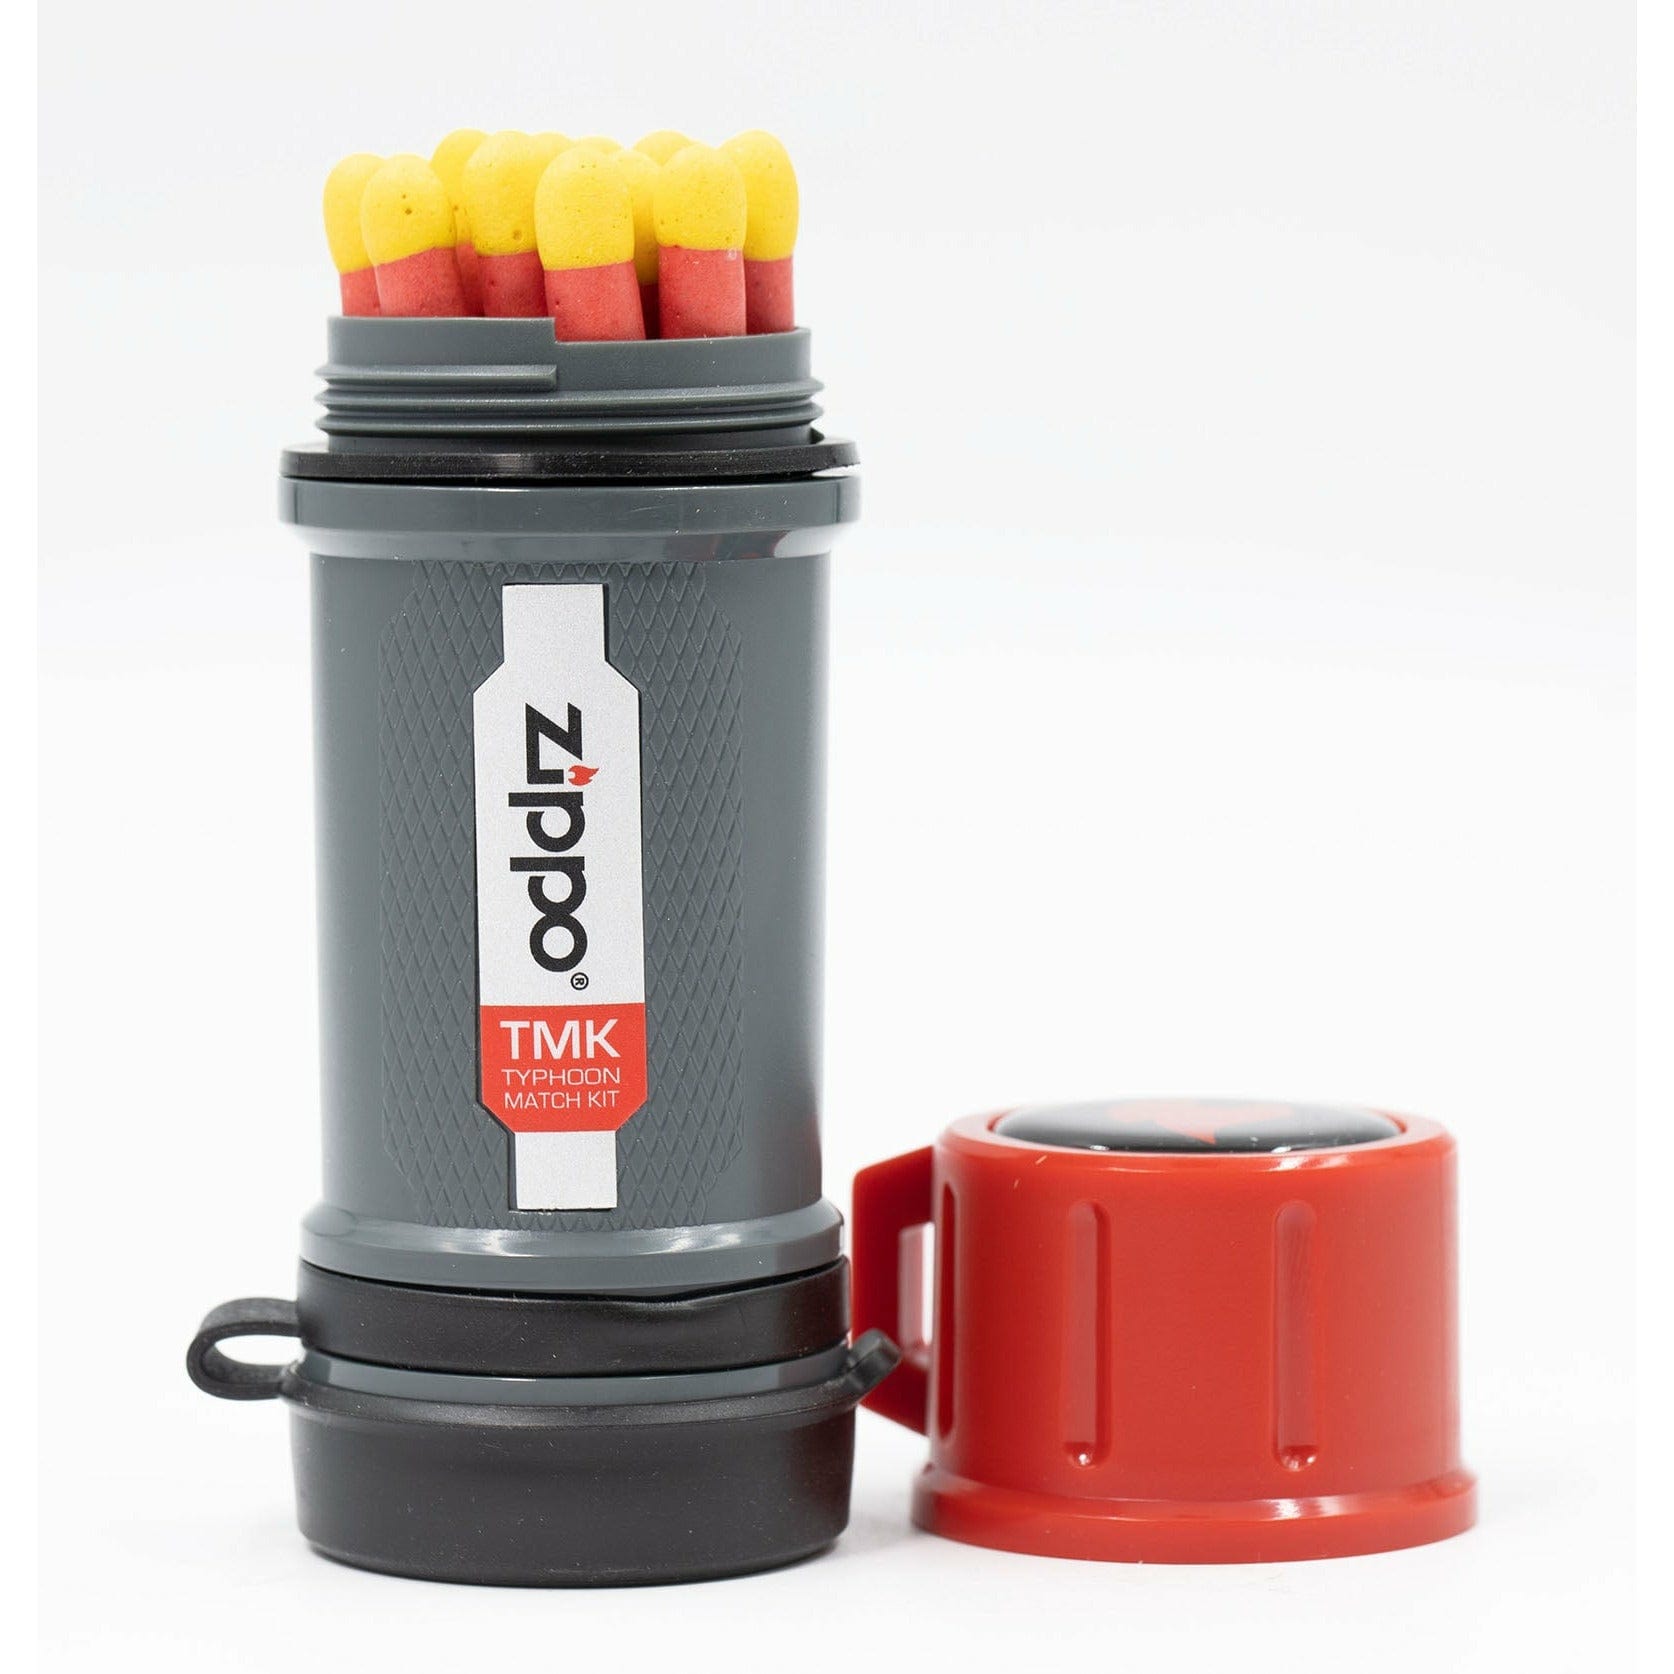 Zippo**MEGA CRATE** Zippo Typhoon Match Kit, Fire Fast Torch, Emergency Fire Kit